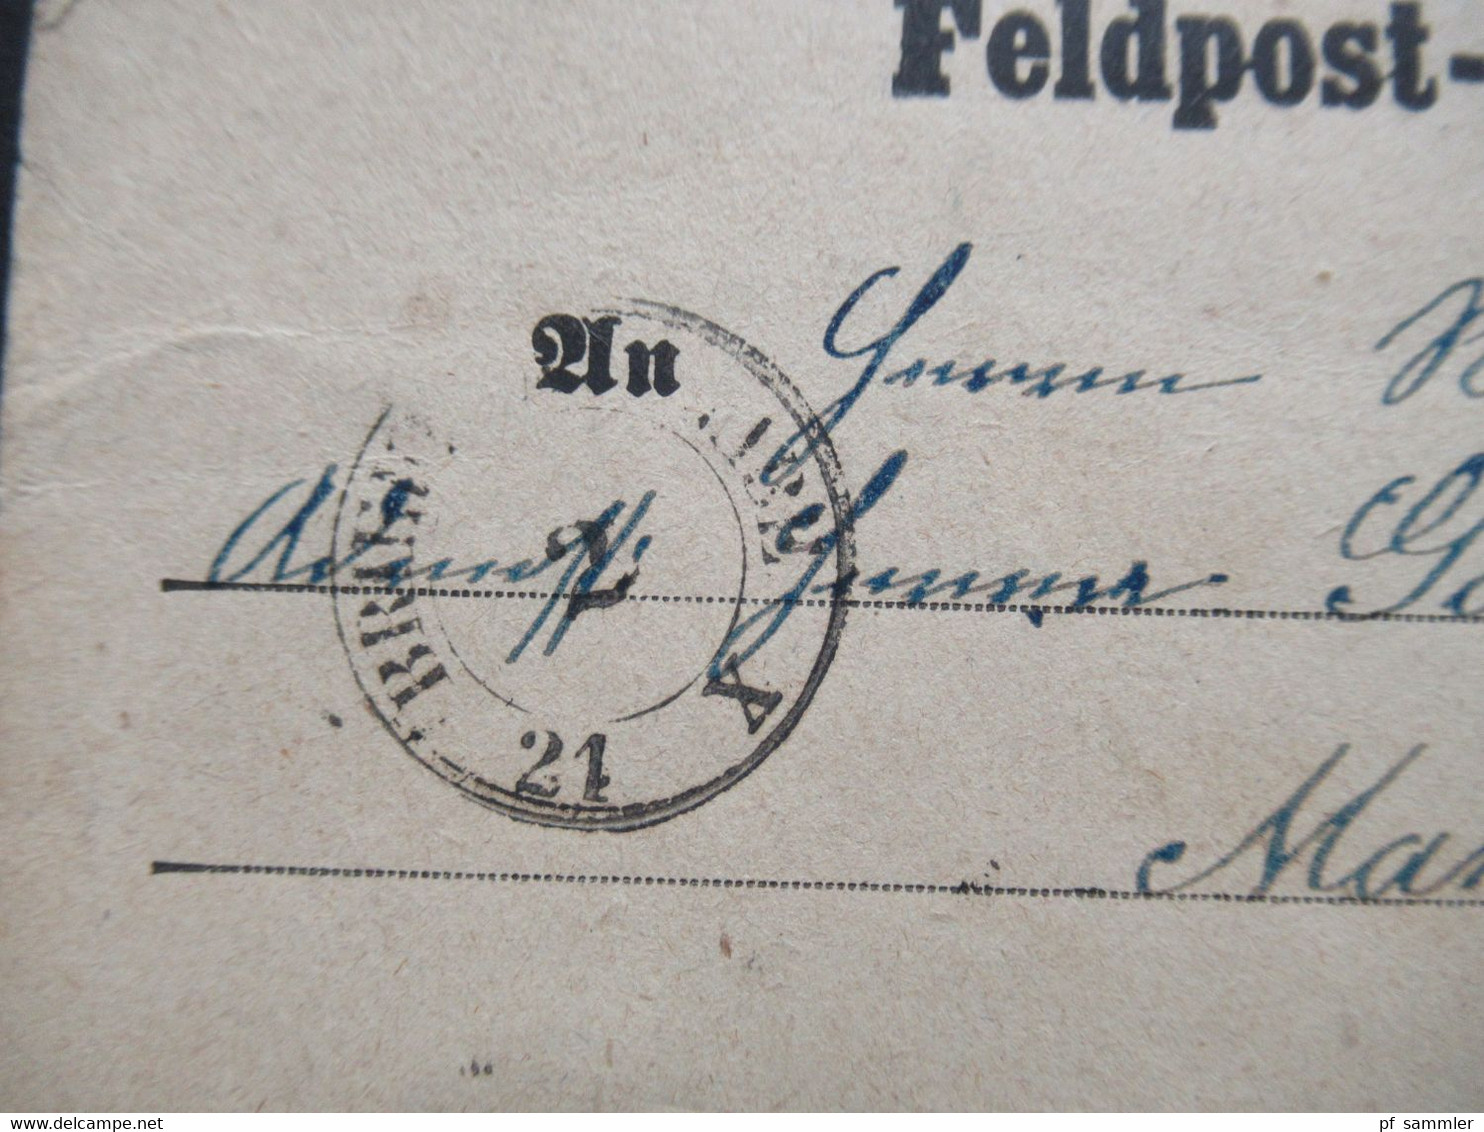 Feldpost Deutsch Französischer Krieg 16.10.1870 Stempel Feld - Post Exped. 24. Inf. Div. Siege De Paris / Montfermeil - Guerre De 1870